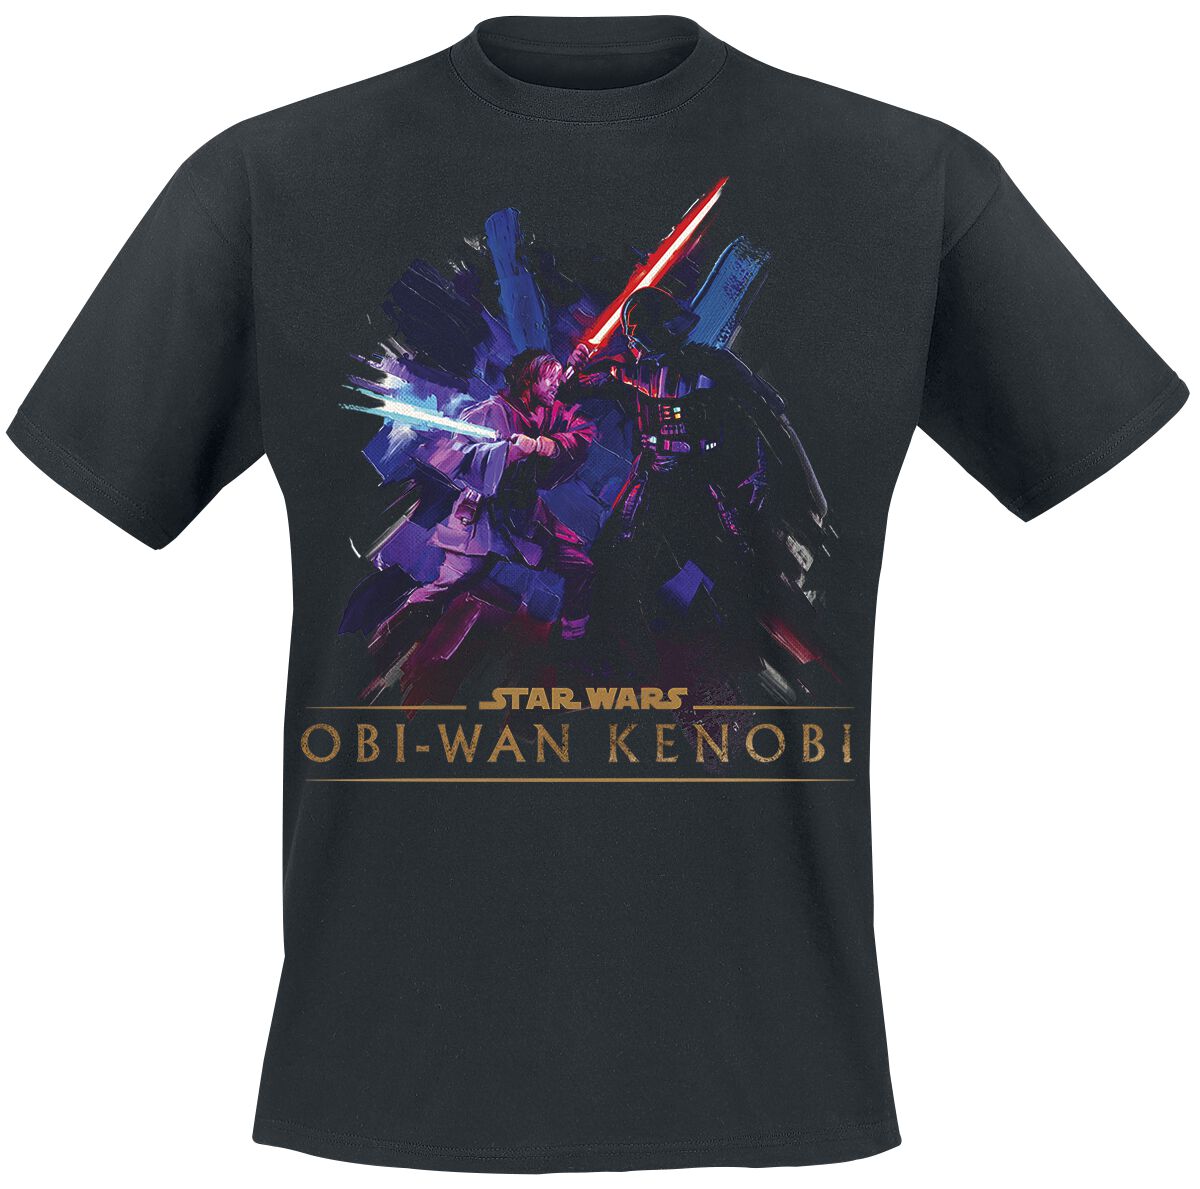 Star Wars Obi-Wan Kenobi - Vintage T-Shirt schwarz in S